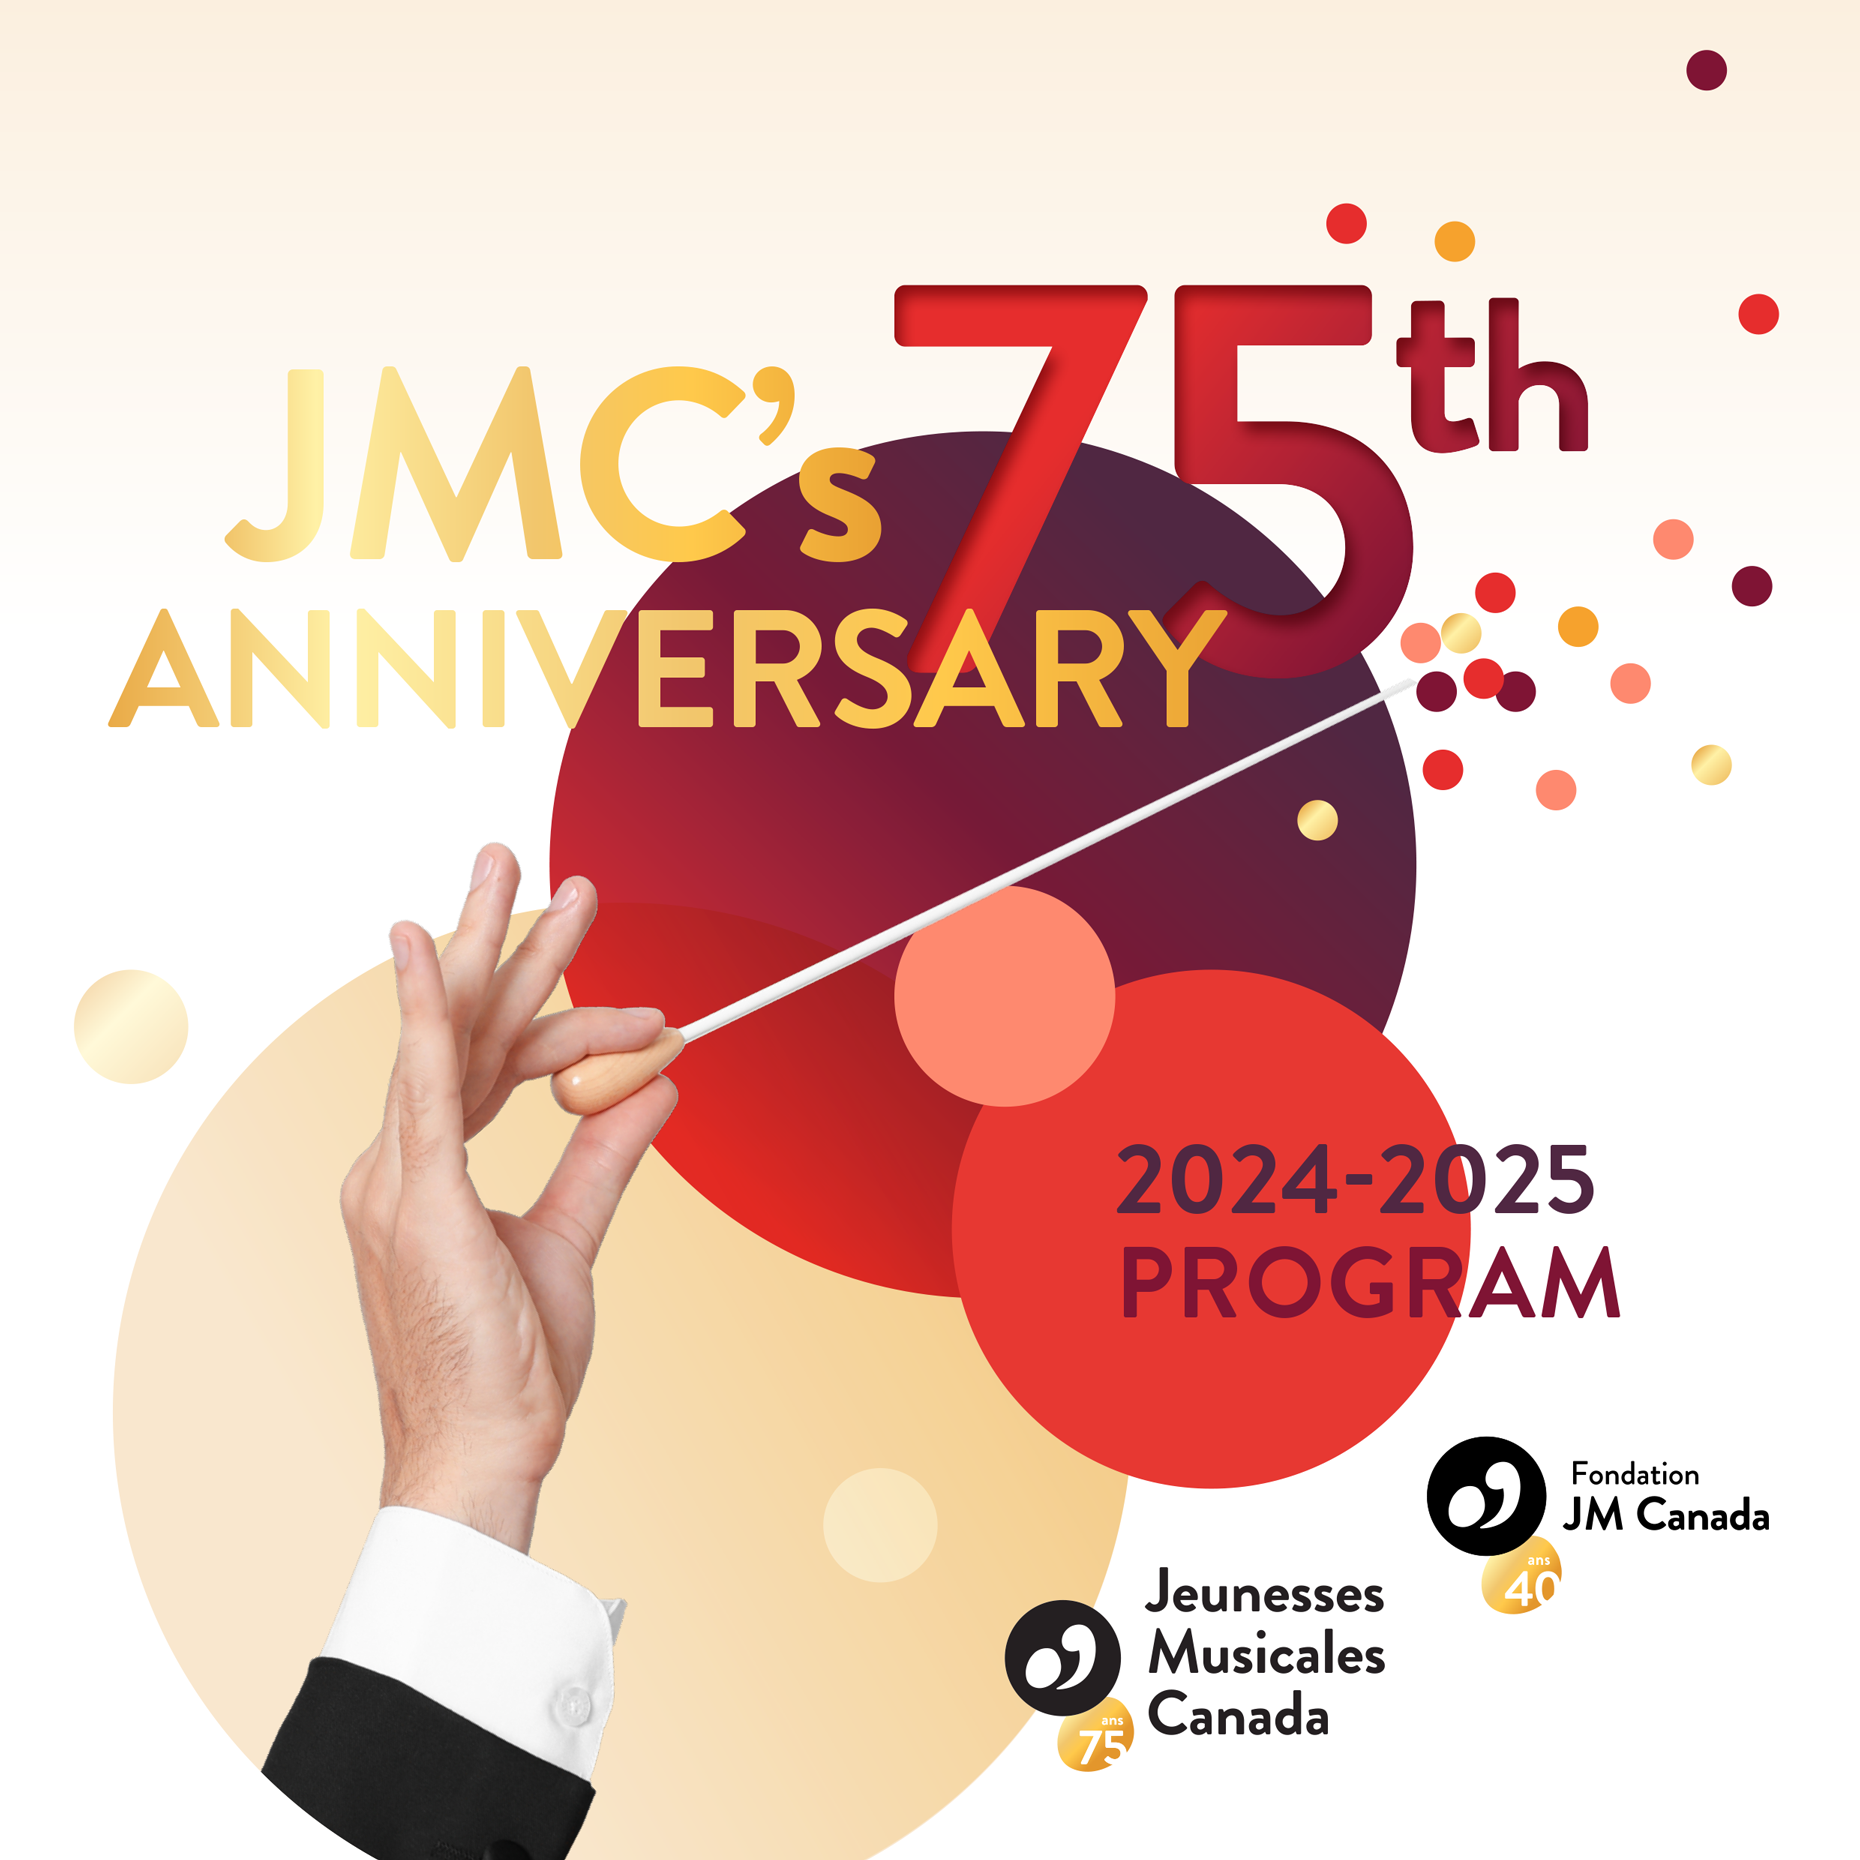 JMC's 75th anniversary program